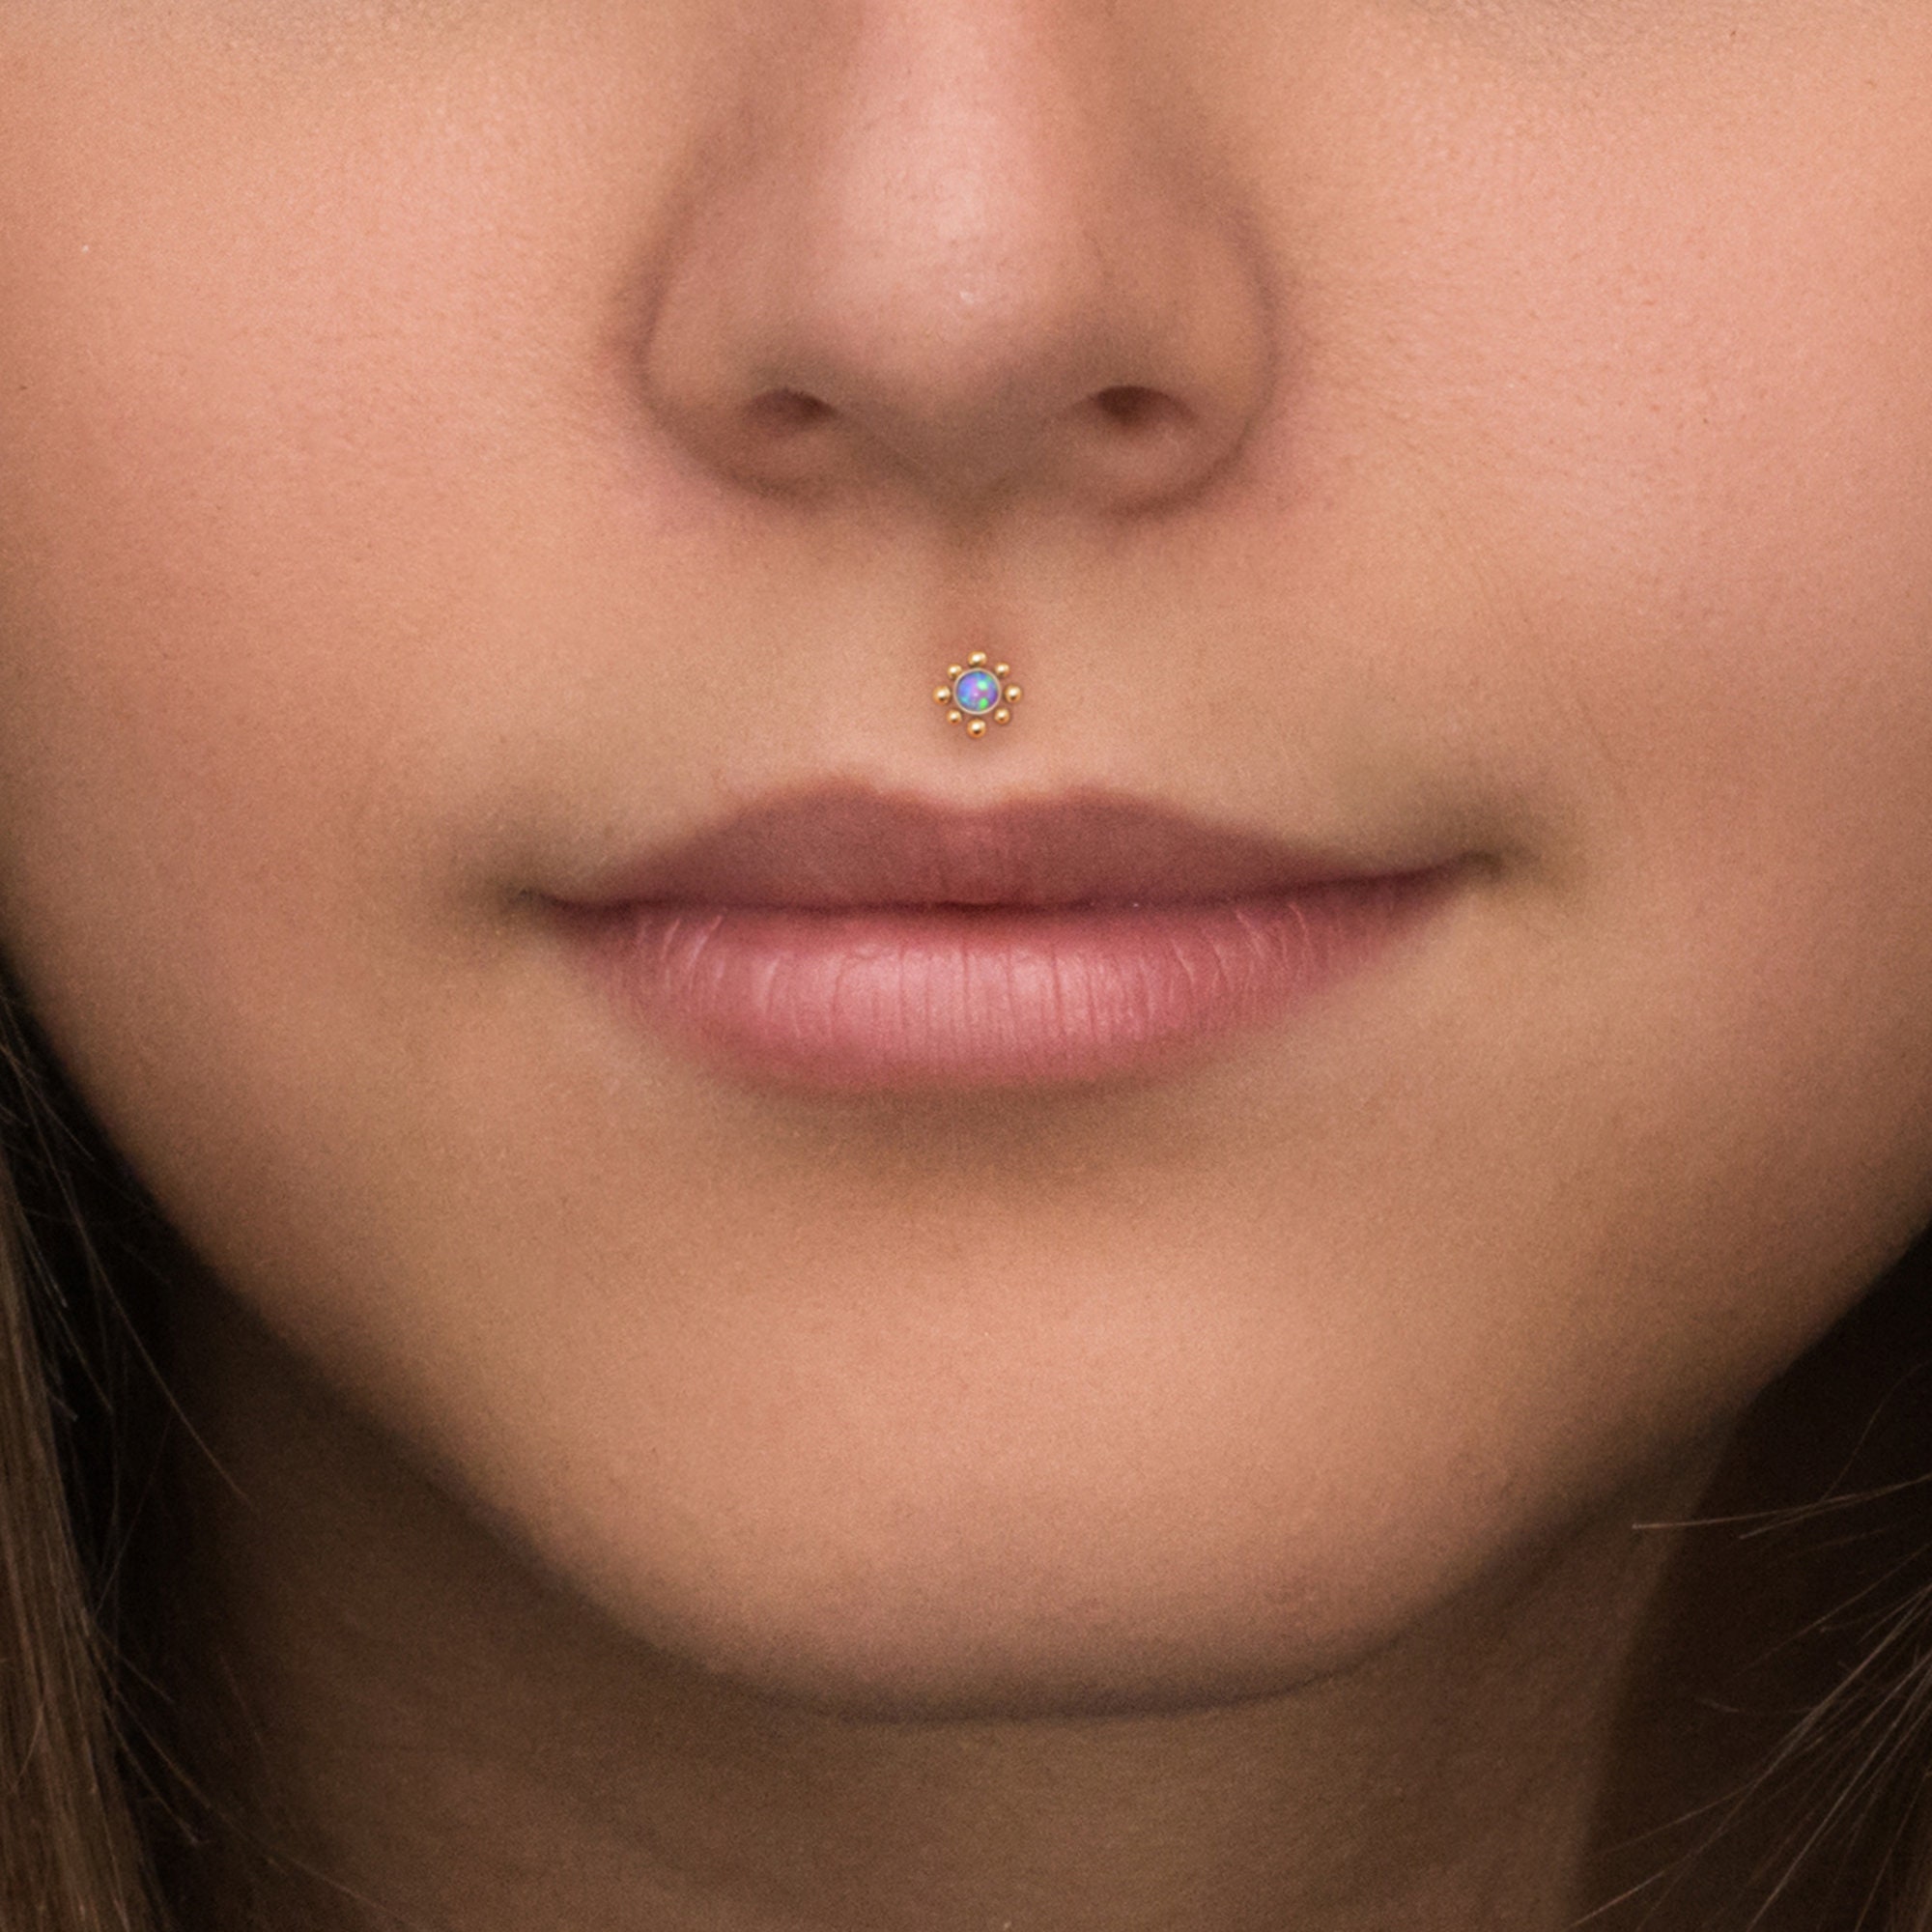 Surgical Steel Lip Jewelry Piercing Jewelry Medusa Labret Stud with Opal Stone Labret Piercing Jewelry Monroe Earring 